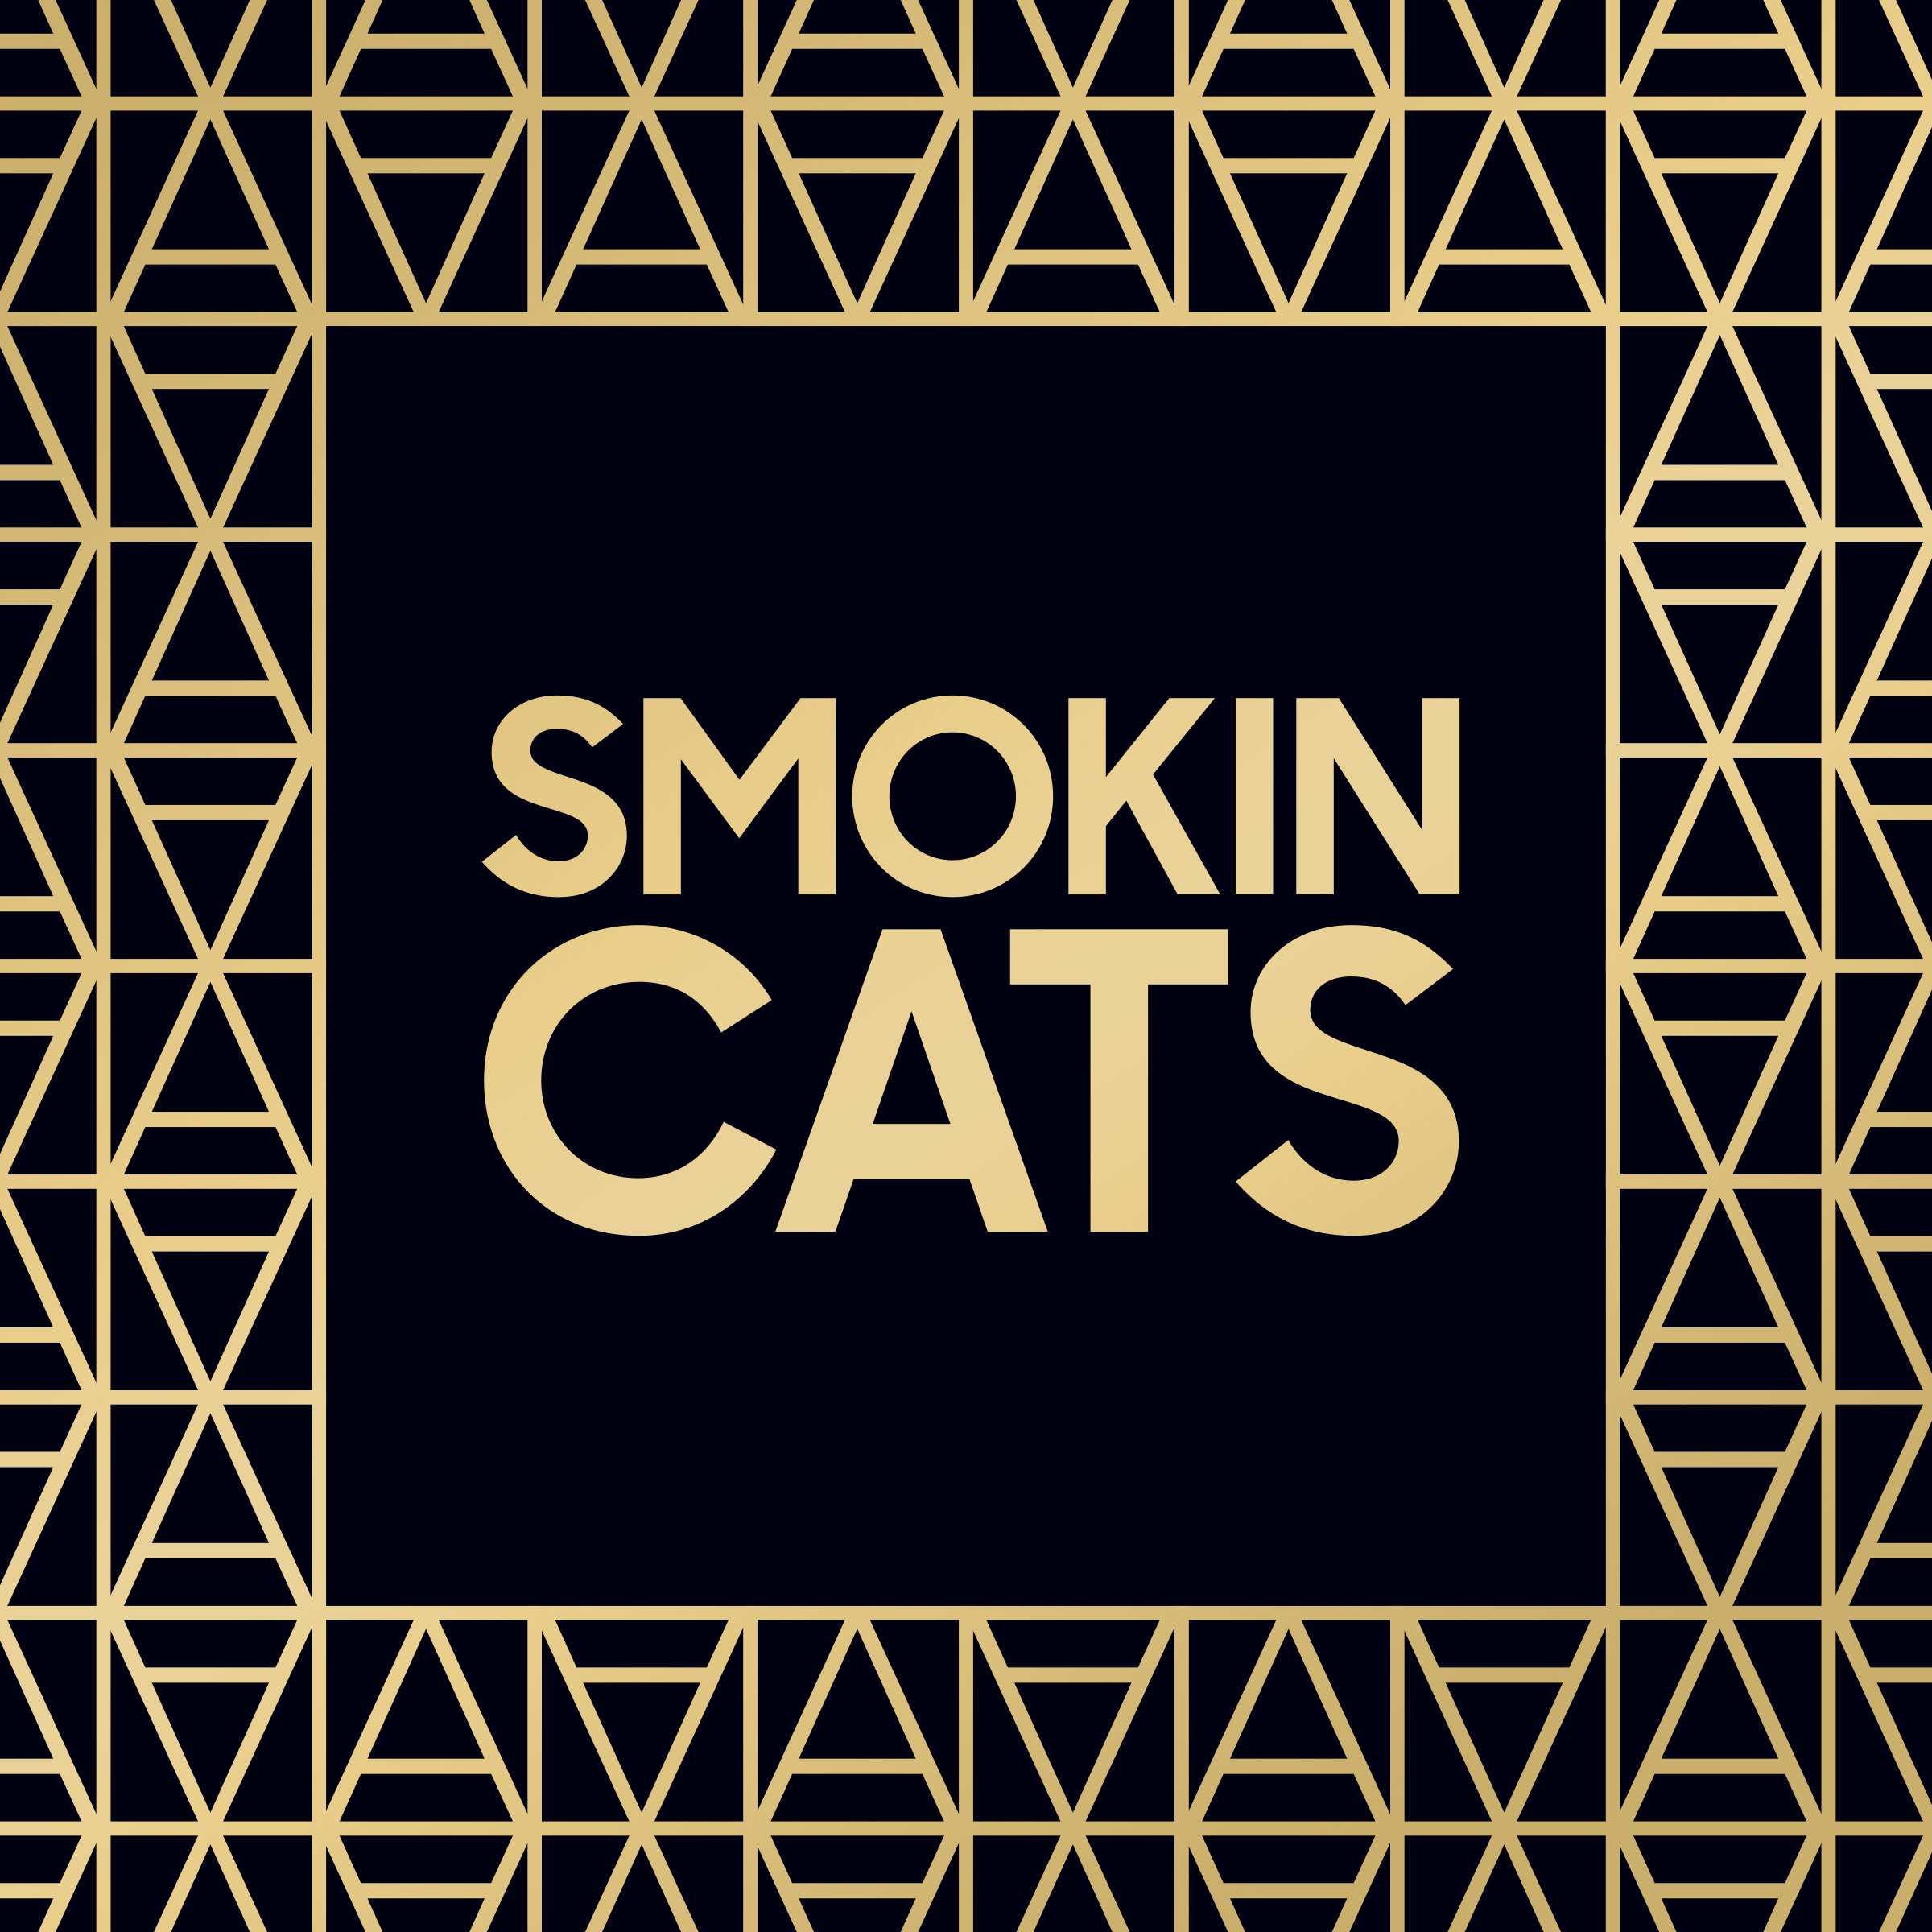 Smokin' Cats